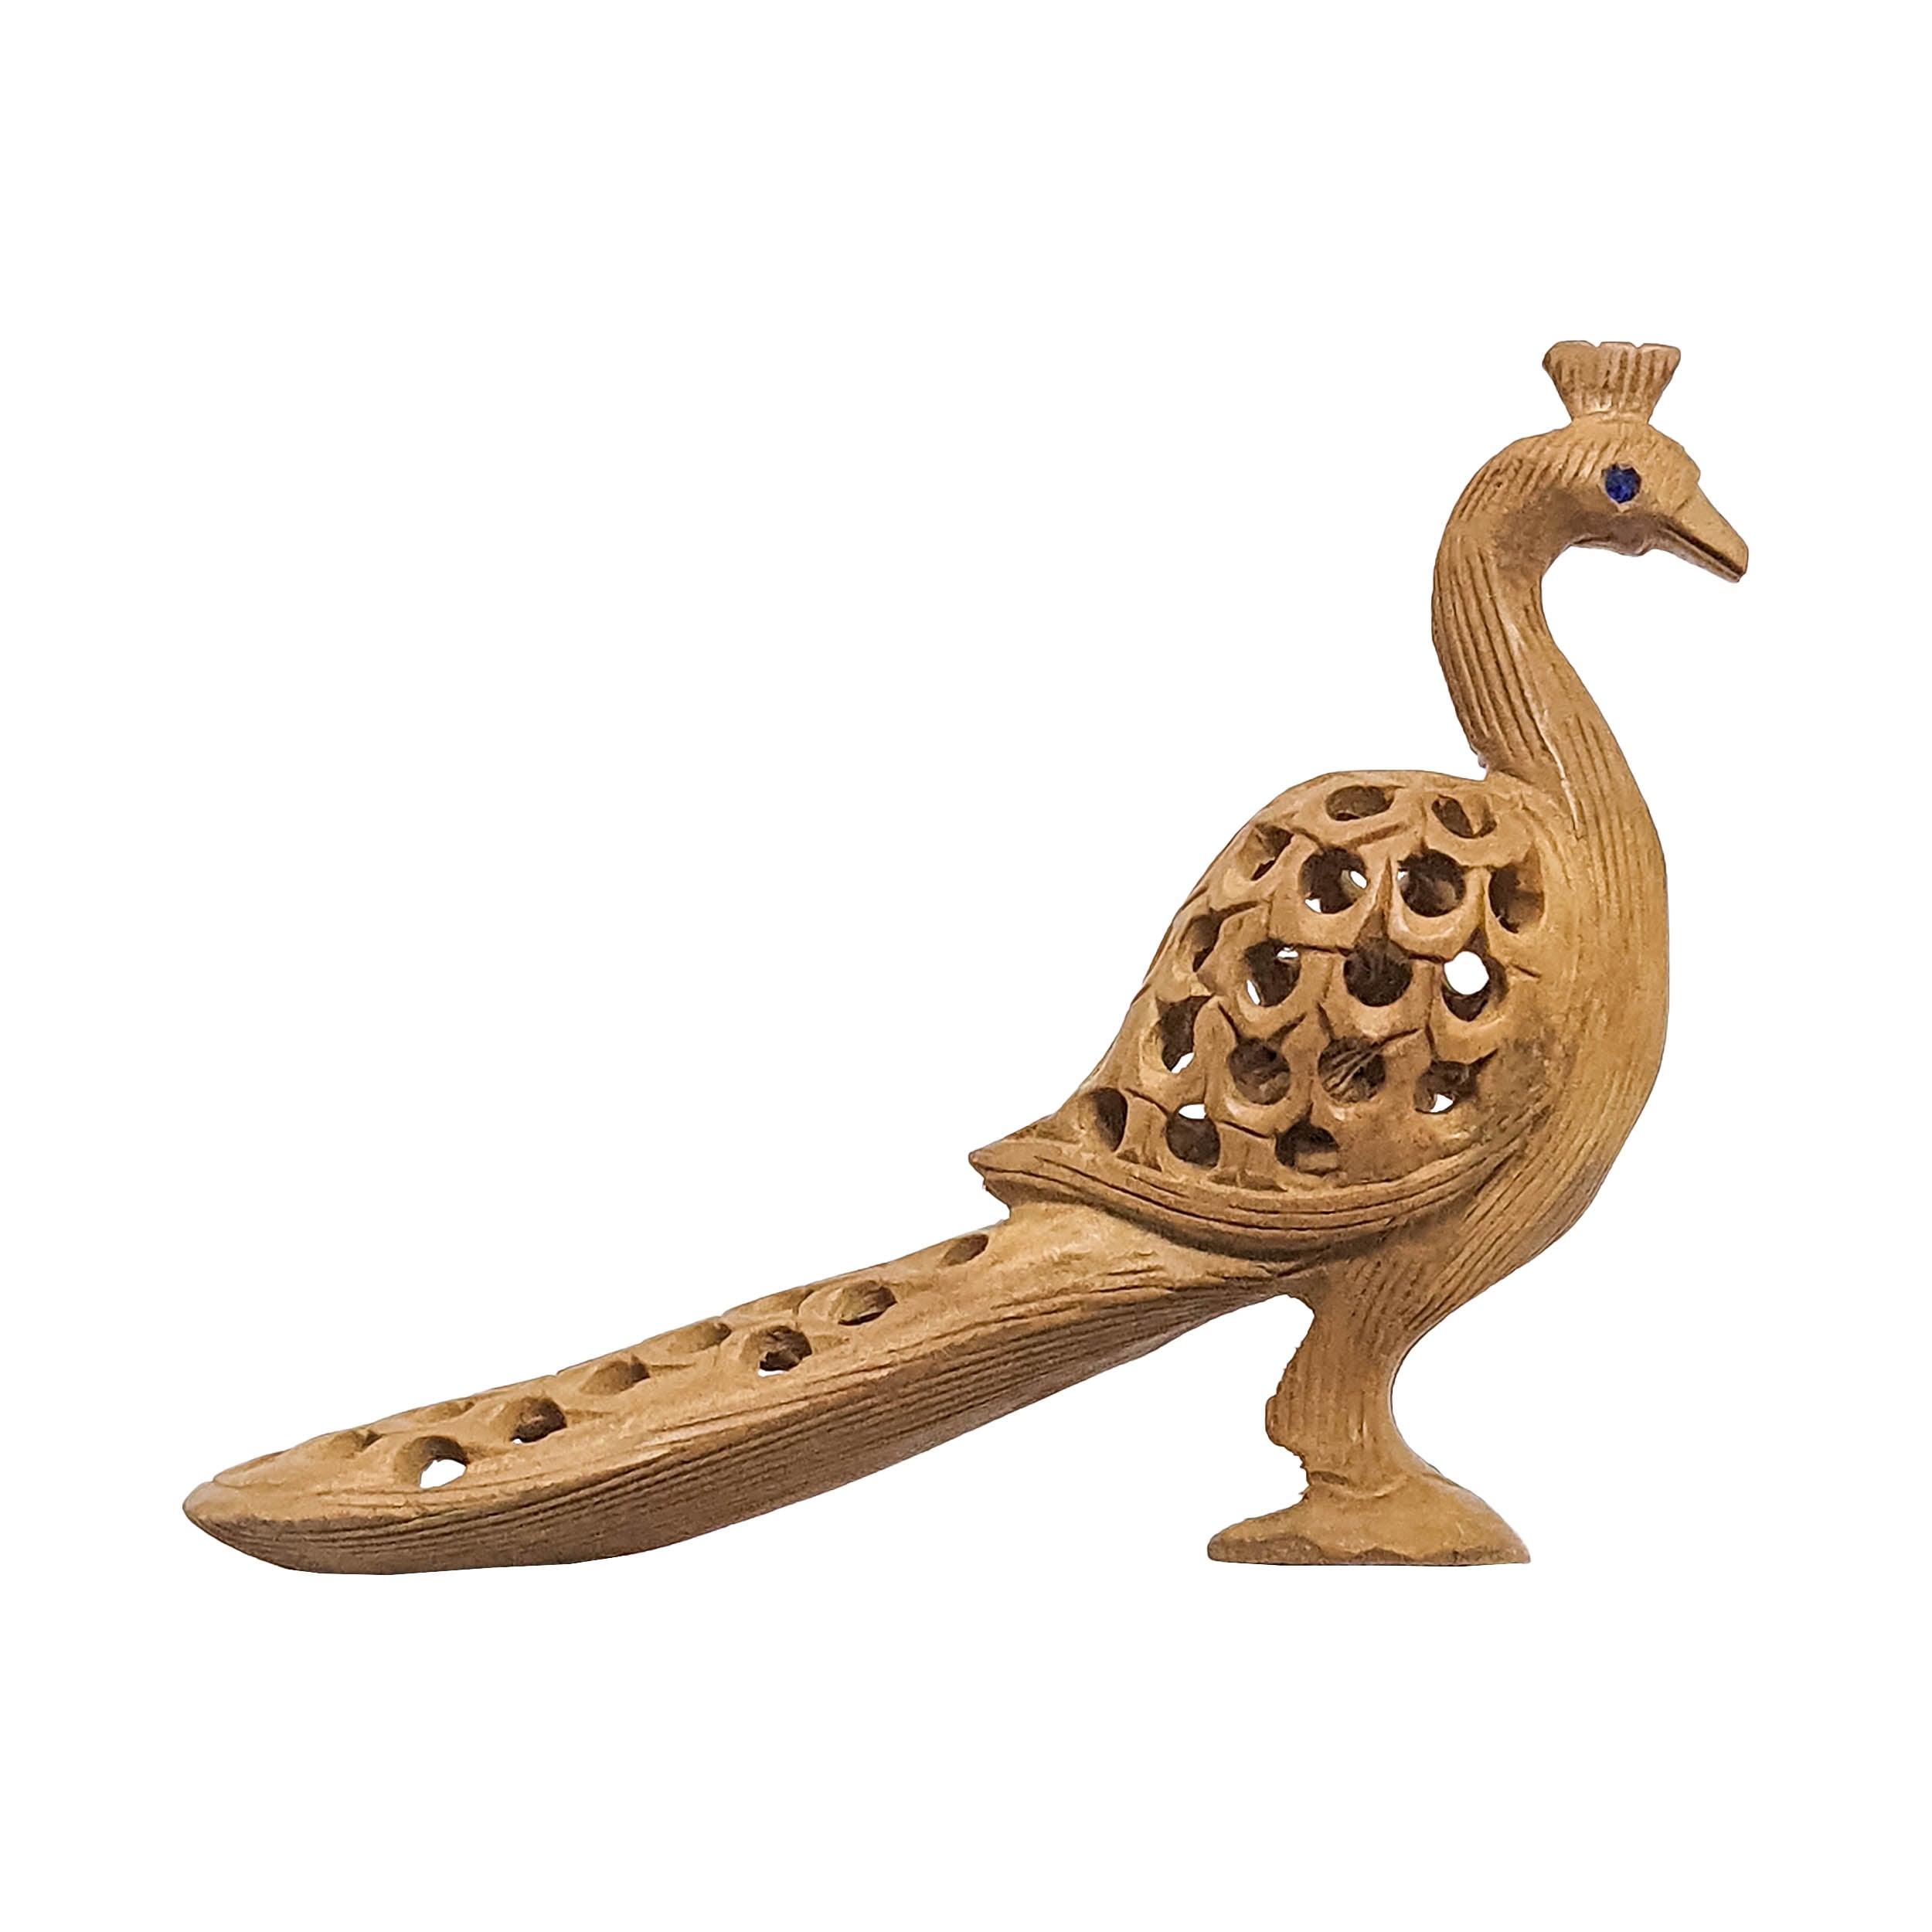 Handcrafted Wooden Peacock Sculpture